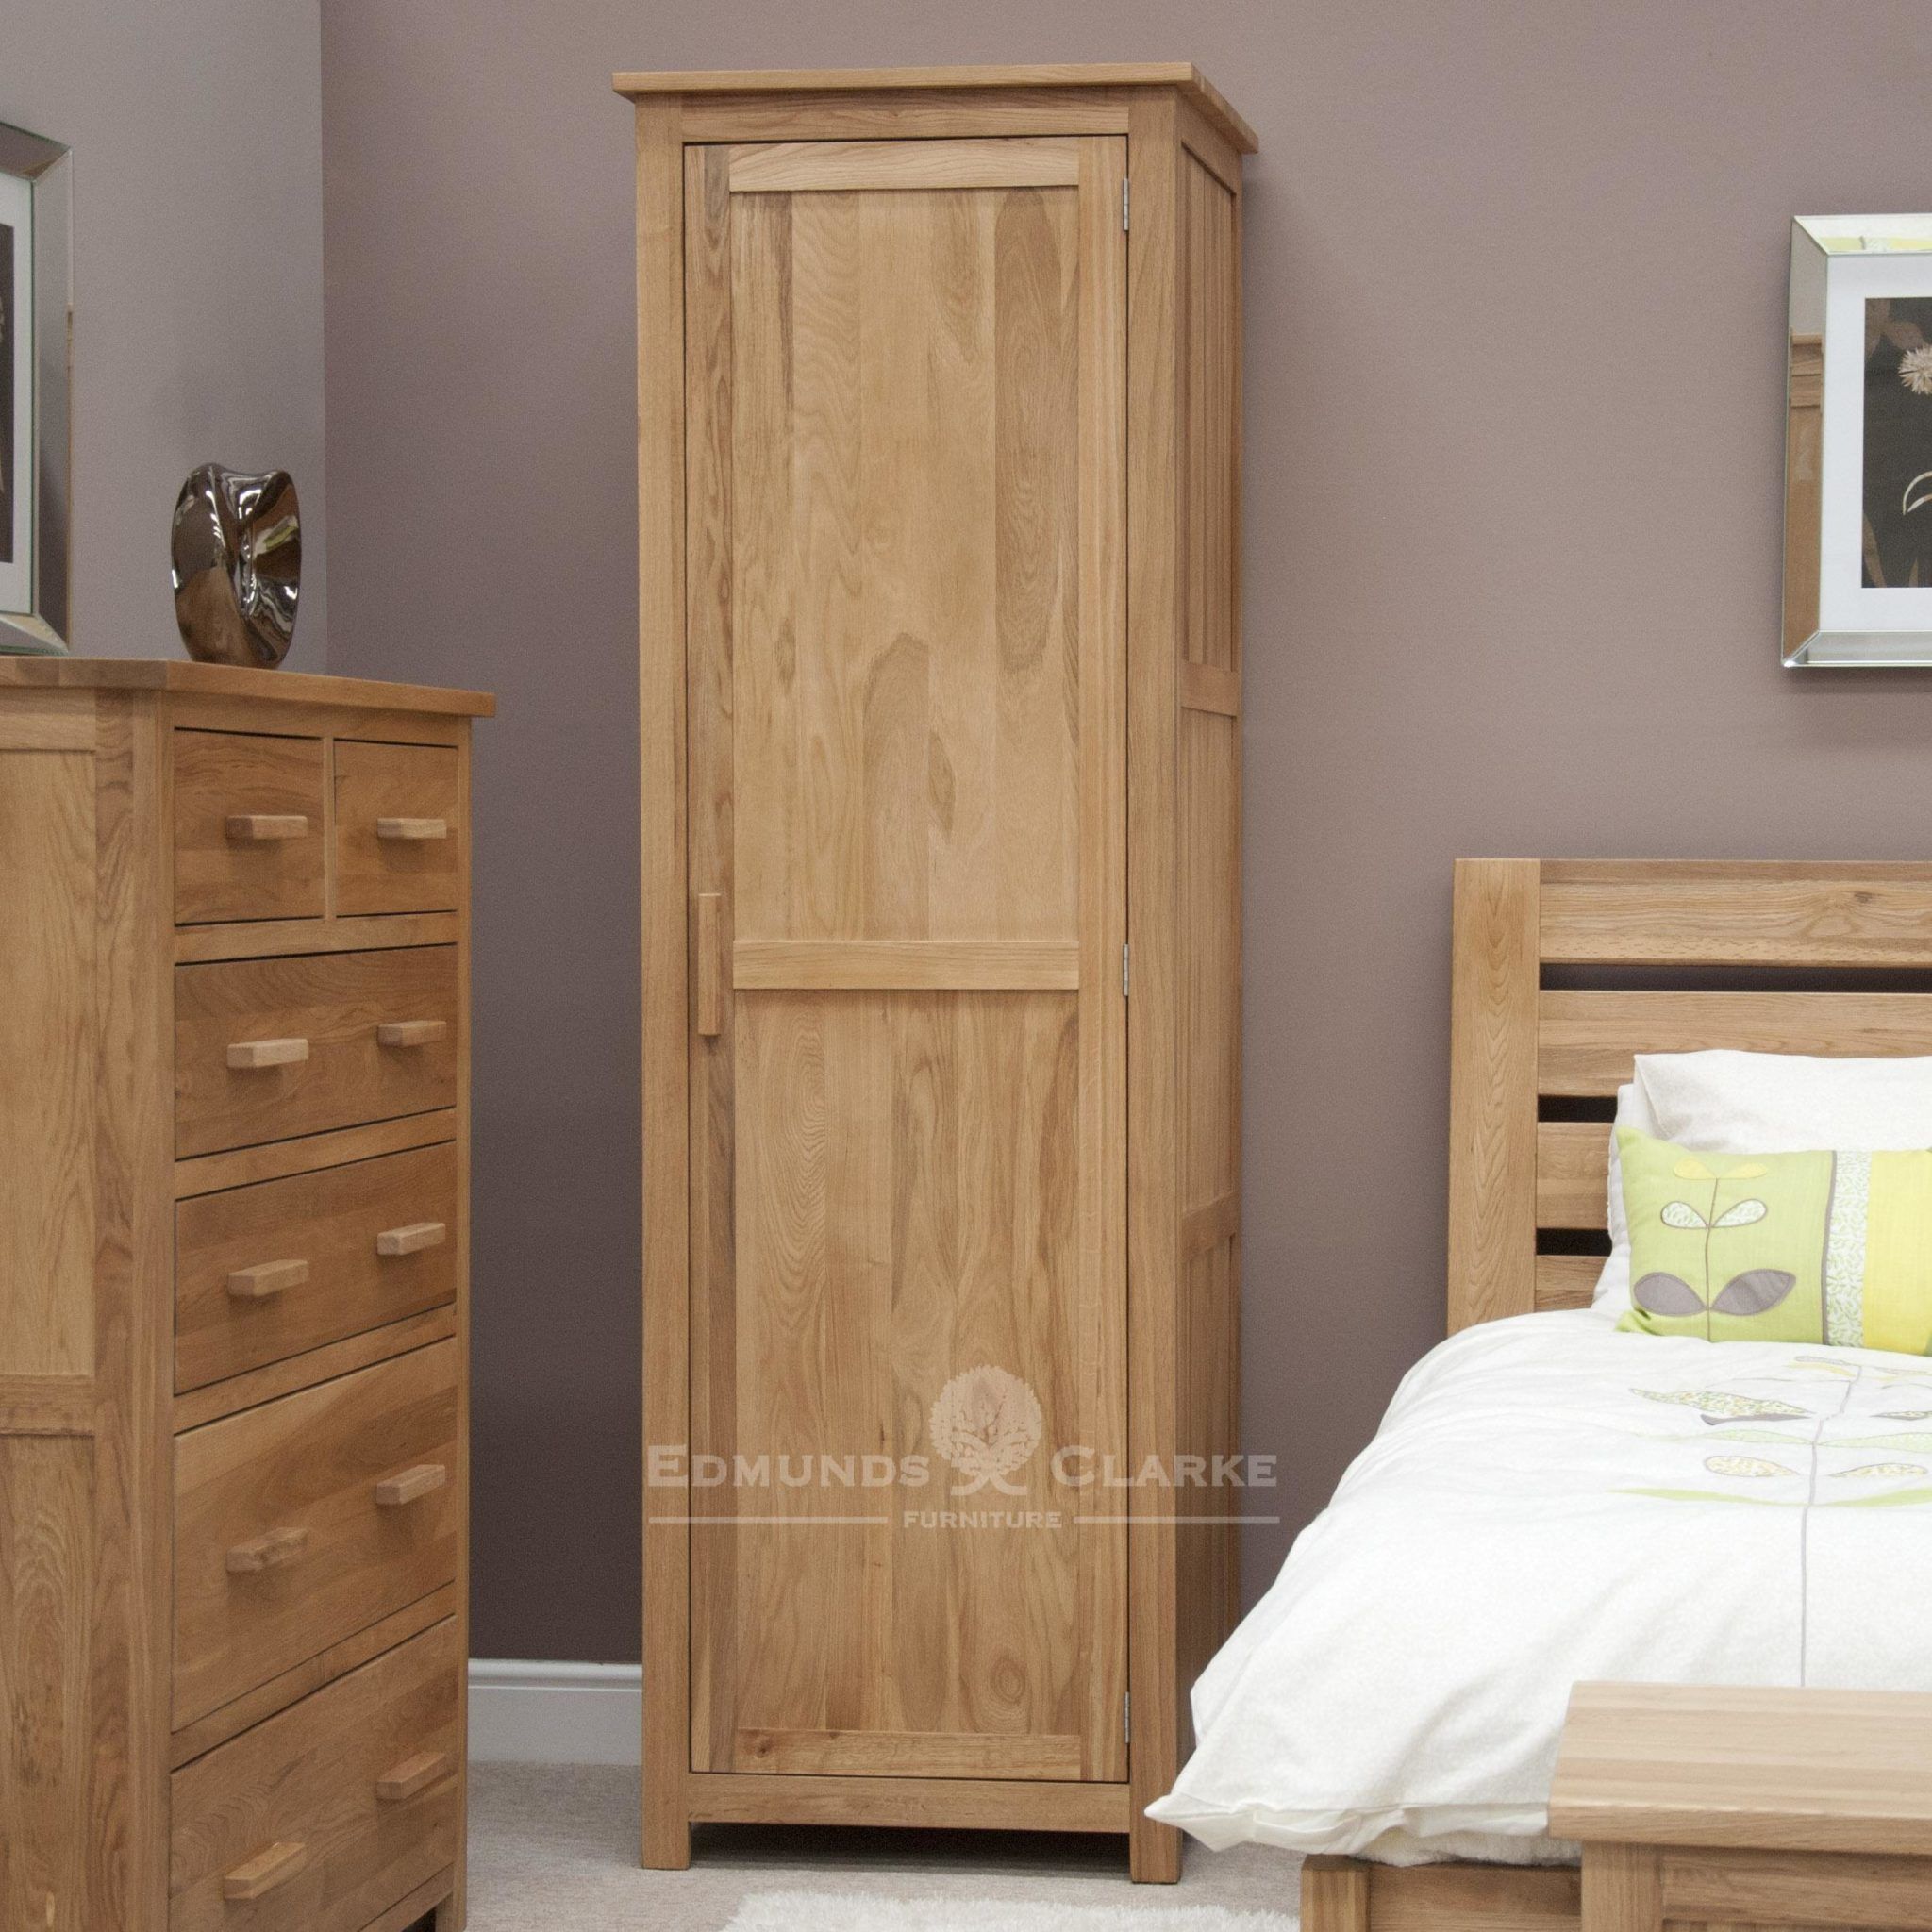 Bury Solid Oak Single Slim Wardrobe | Edmunds & Clarke Furniture Ltd Throughout Single Wardrobes (View 4 of 15)